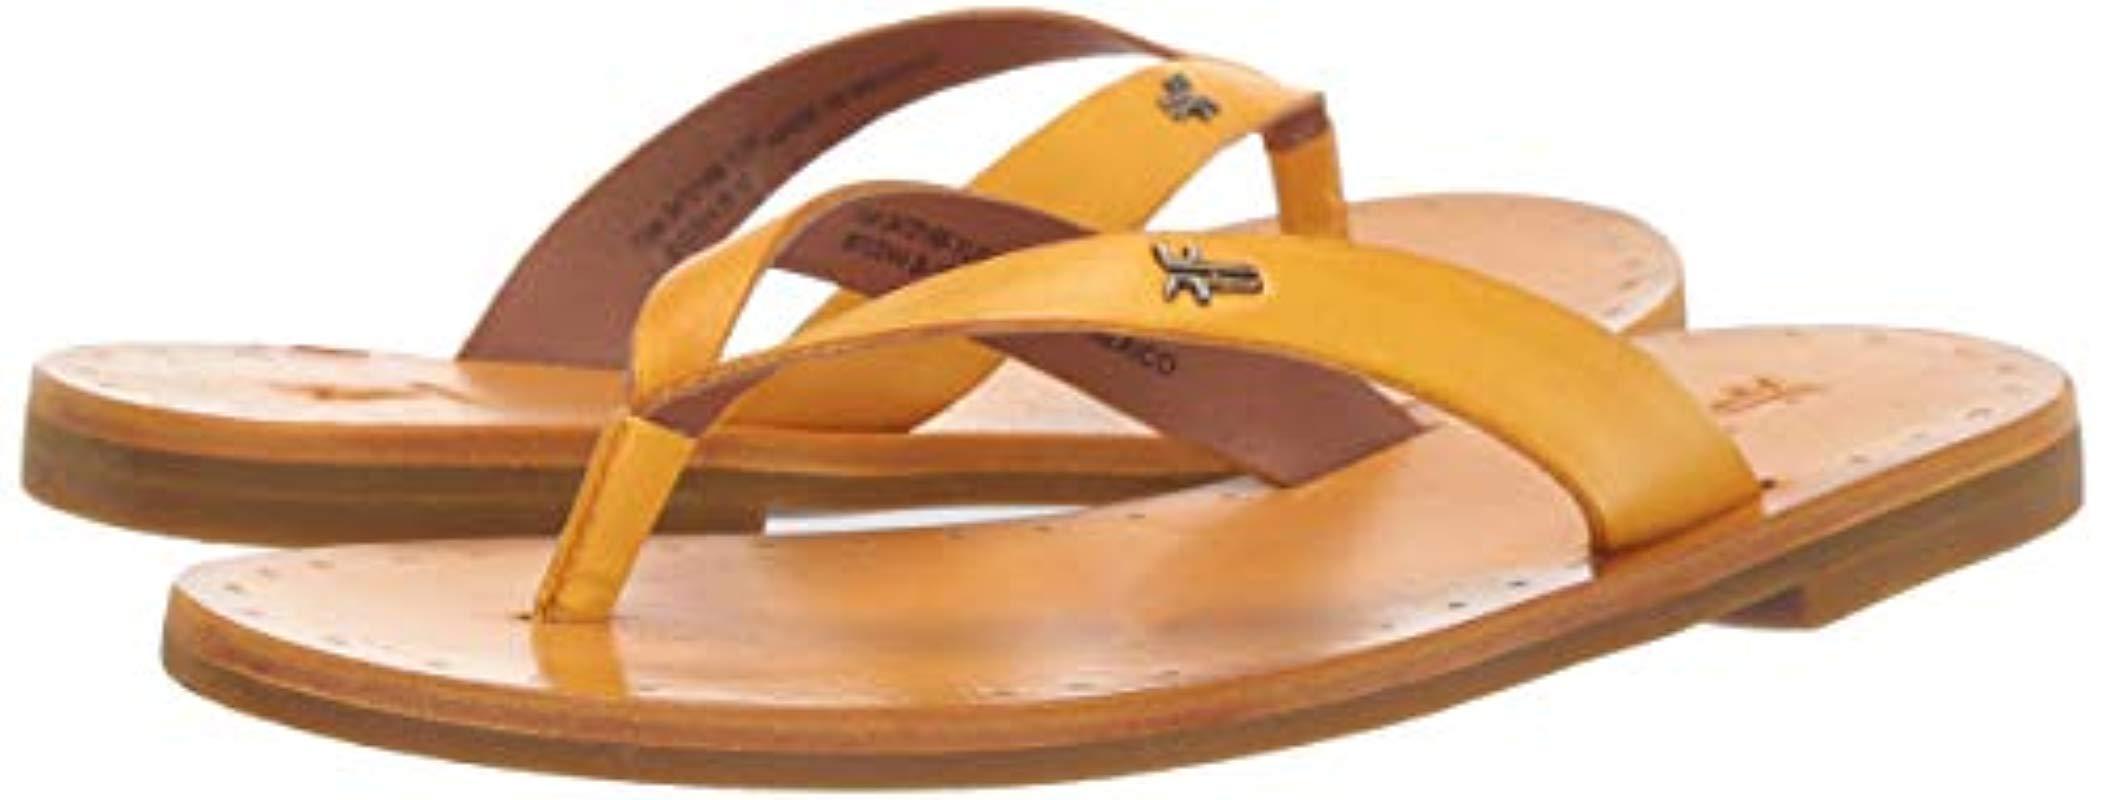 frye azalea thong sandals